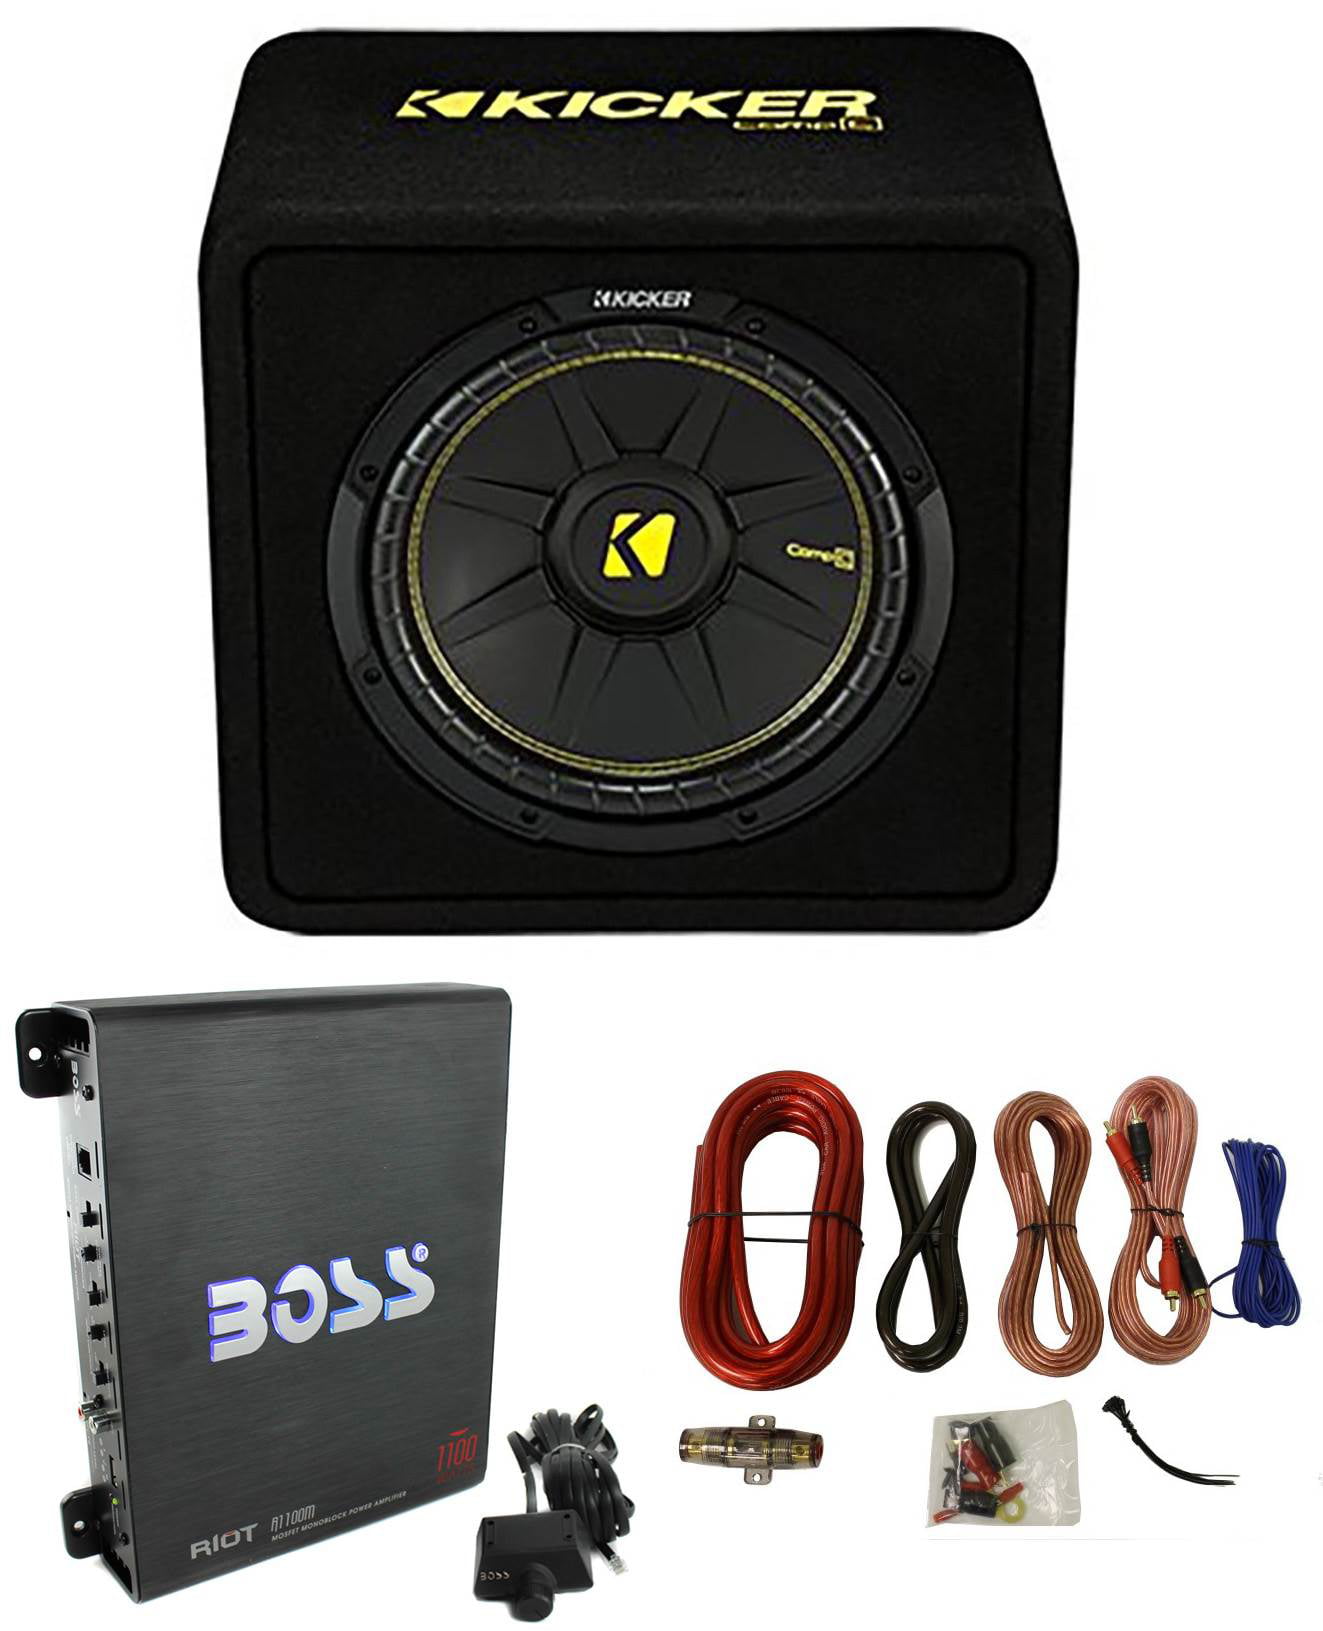 Kicker 12" 600W Car Subwoofer Enclosure and 1100W Mono Amplifier w/ Wiring Kit